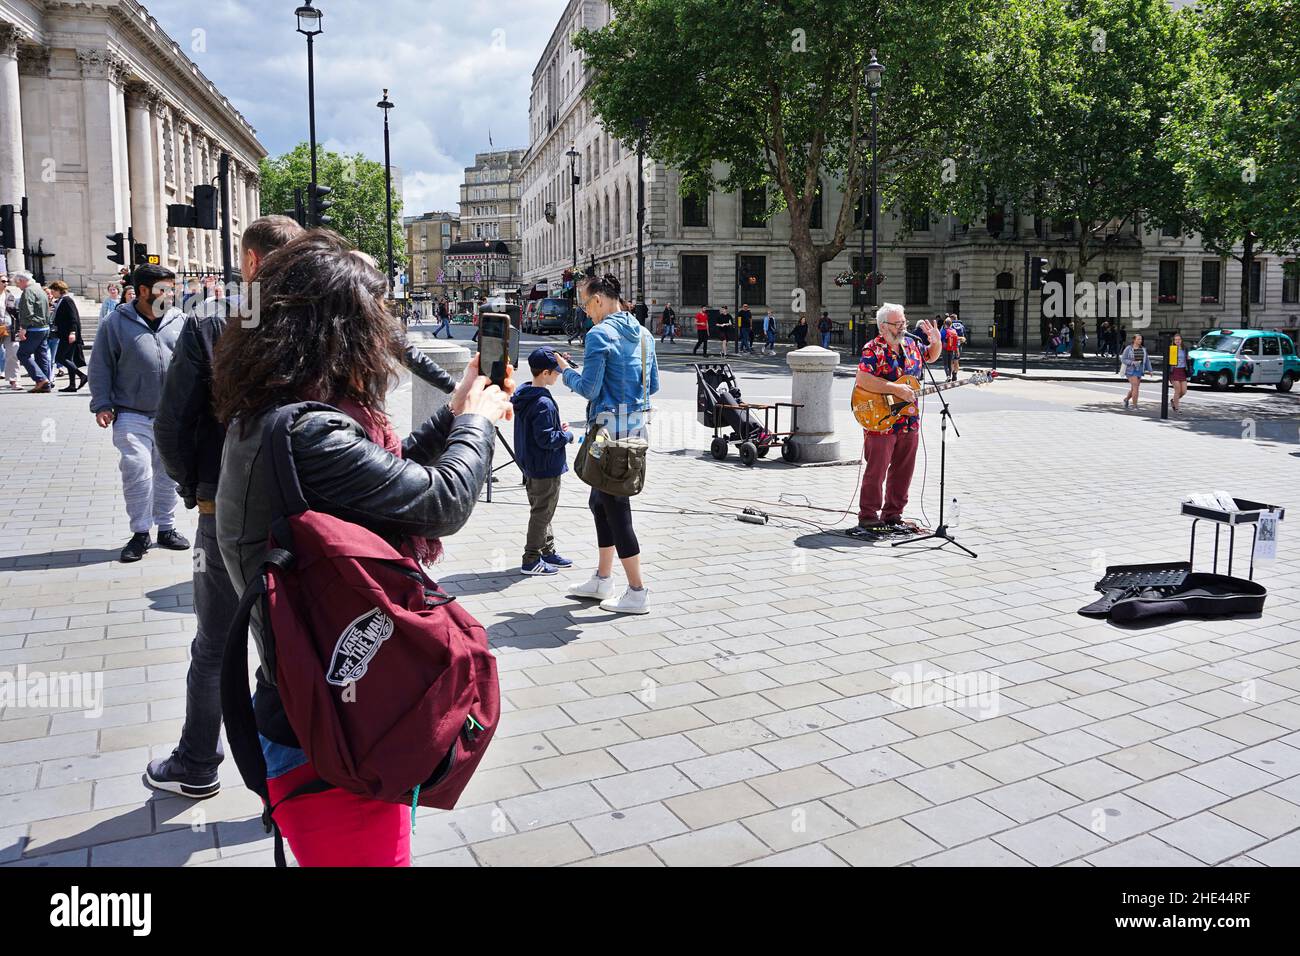 Street performer singing at the Trafalgar Square, London. Stock Photo